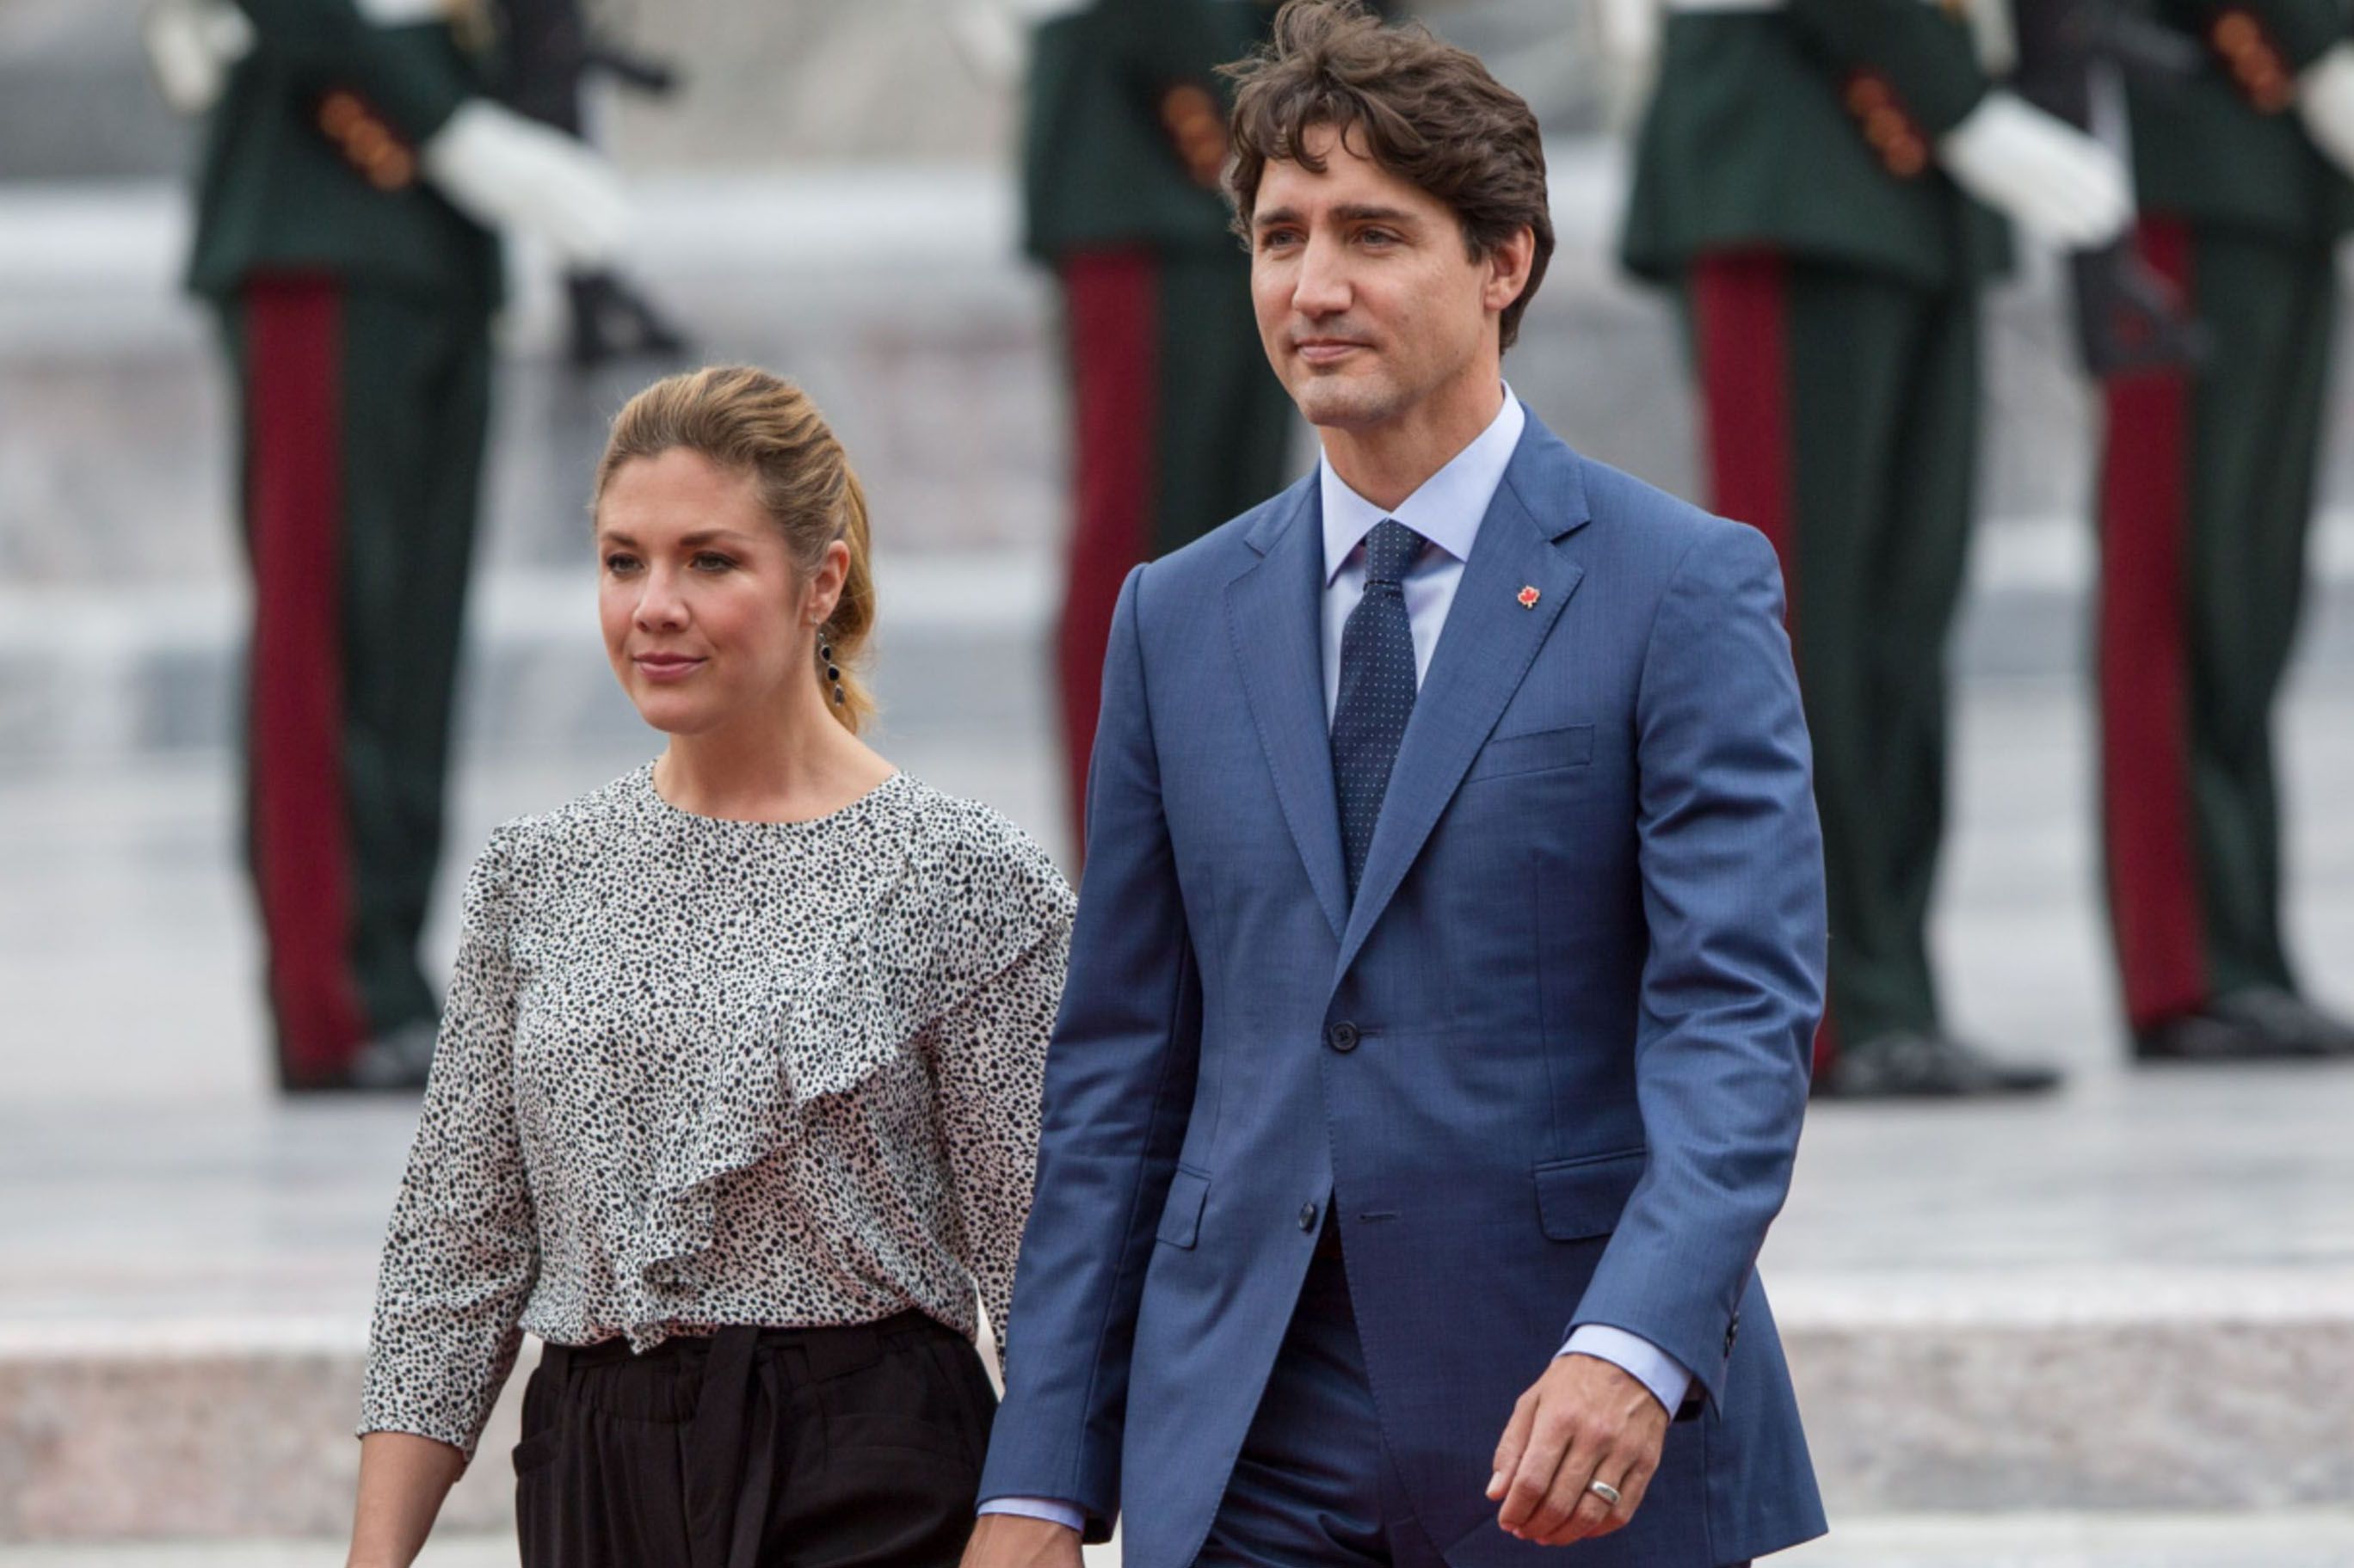 Canadian Prime Justin Trudeau's wife tests positive for coronavirus - The Boston Globe